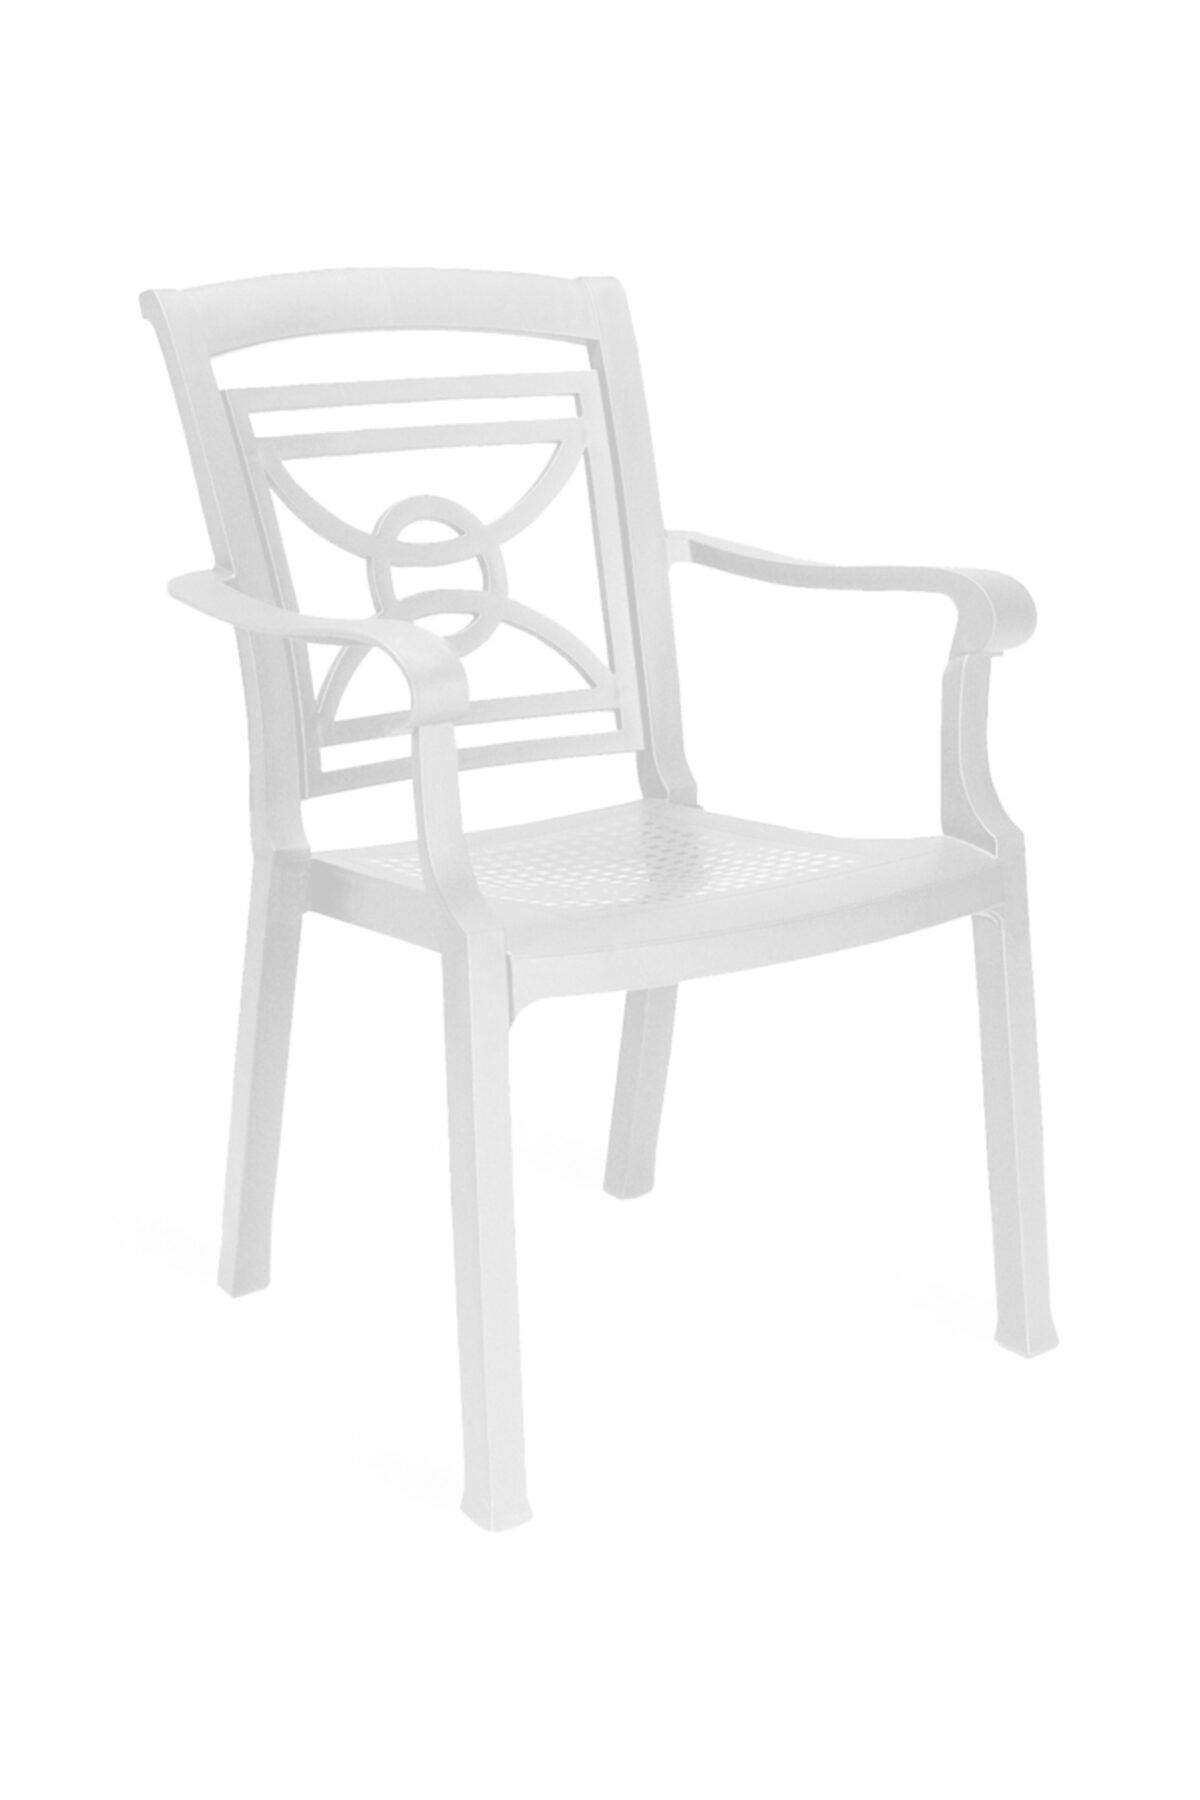 Papatya Commadore Koltuk Beyaz - Plastik Bahçe Sandalyesi